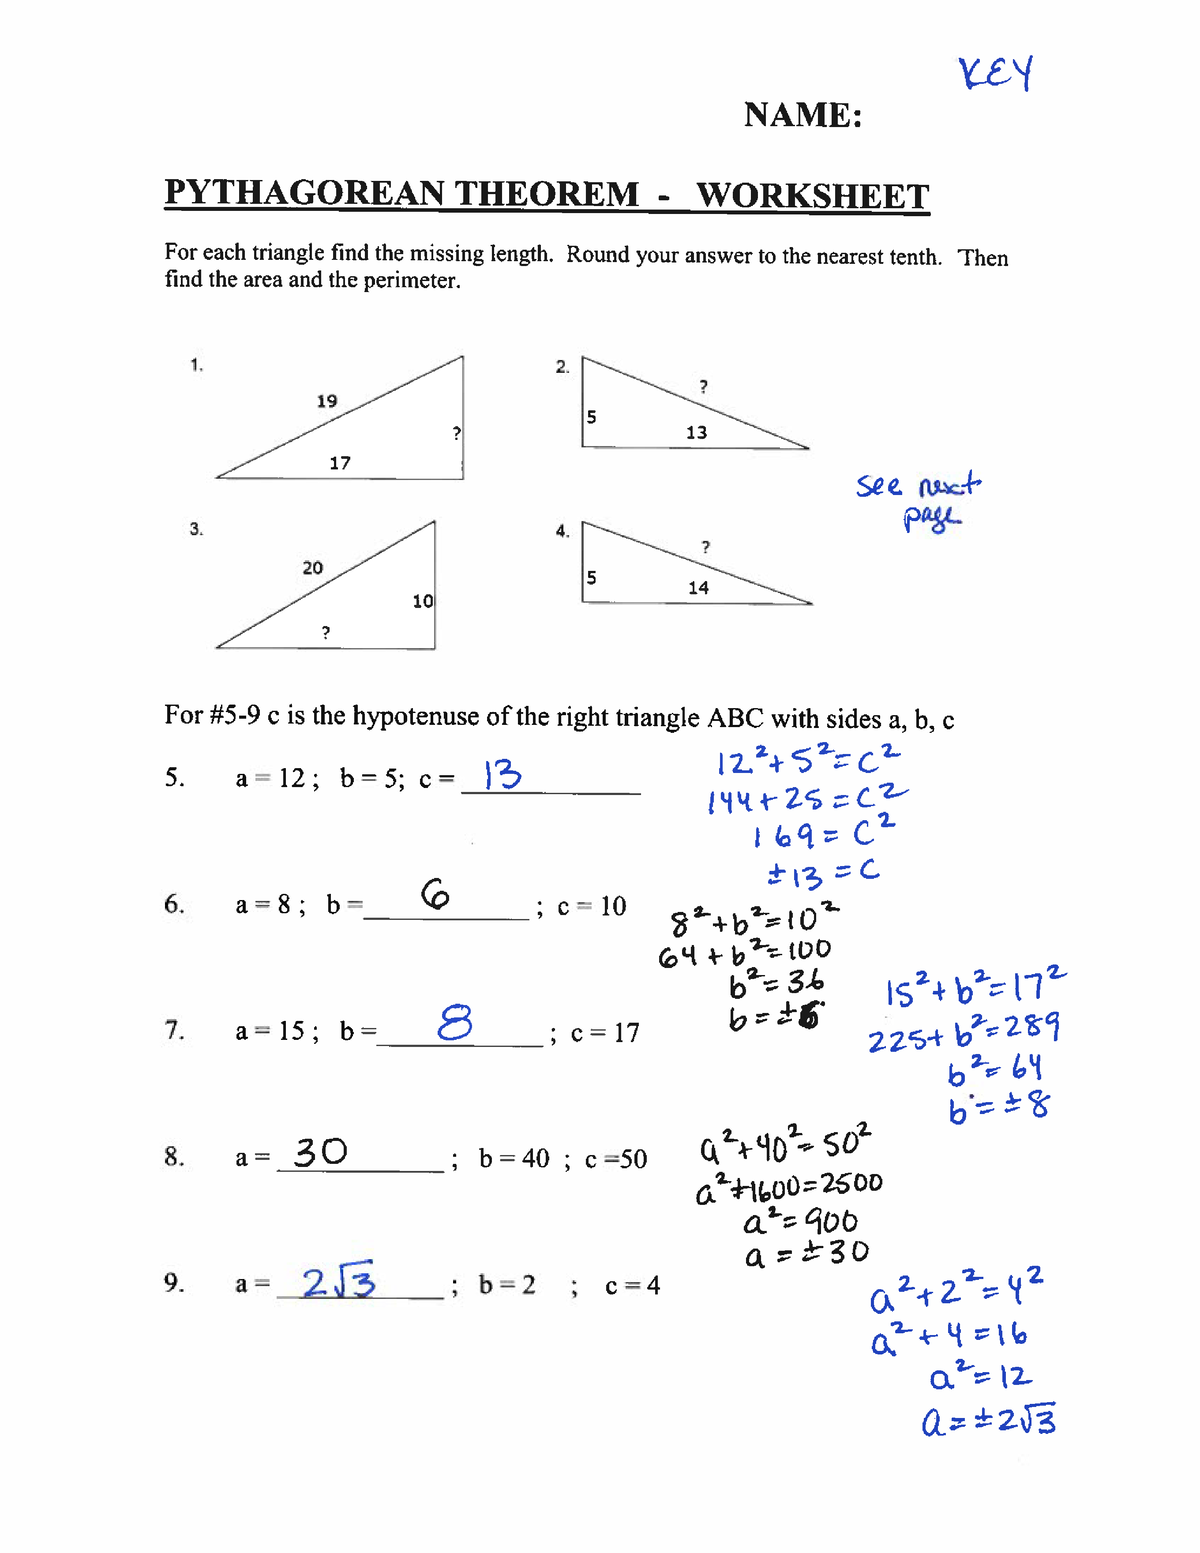 Pythagorean Theorem Worksheet answer KEY Studocu